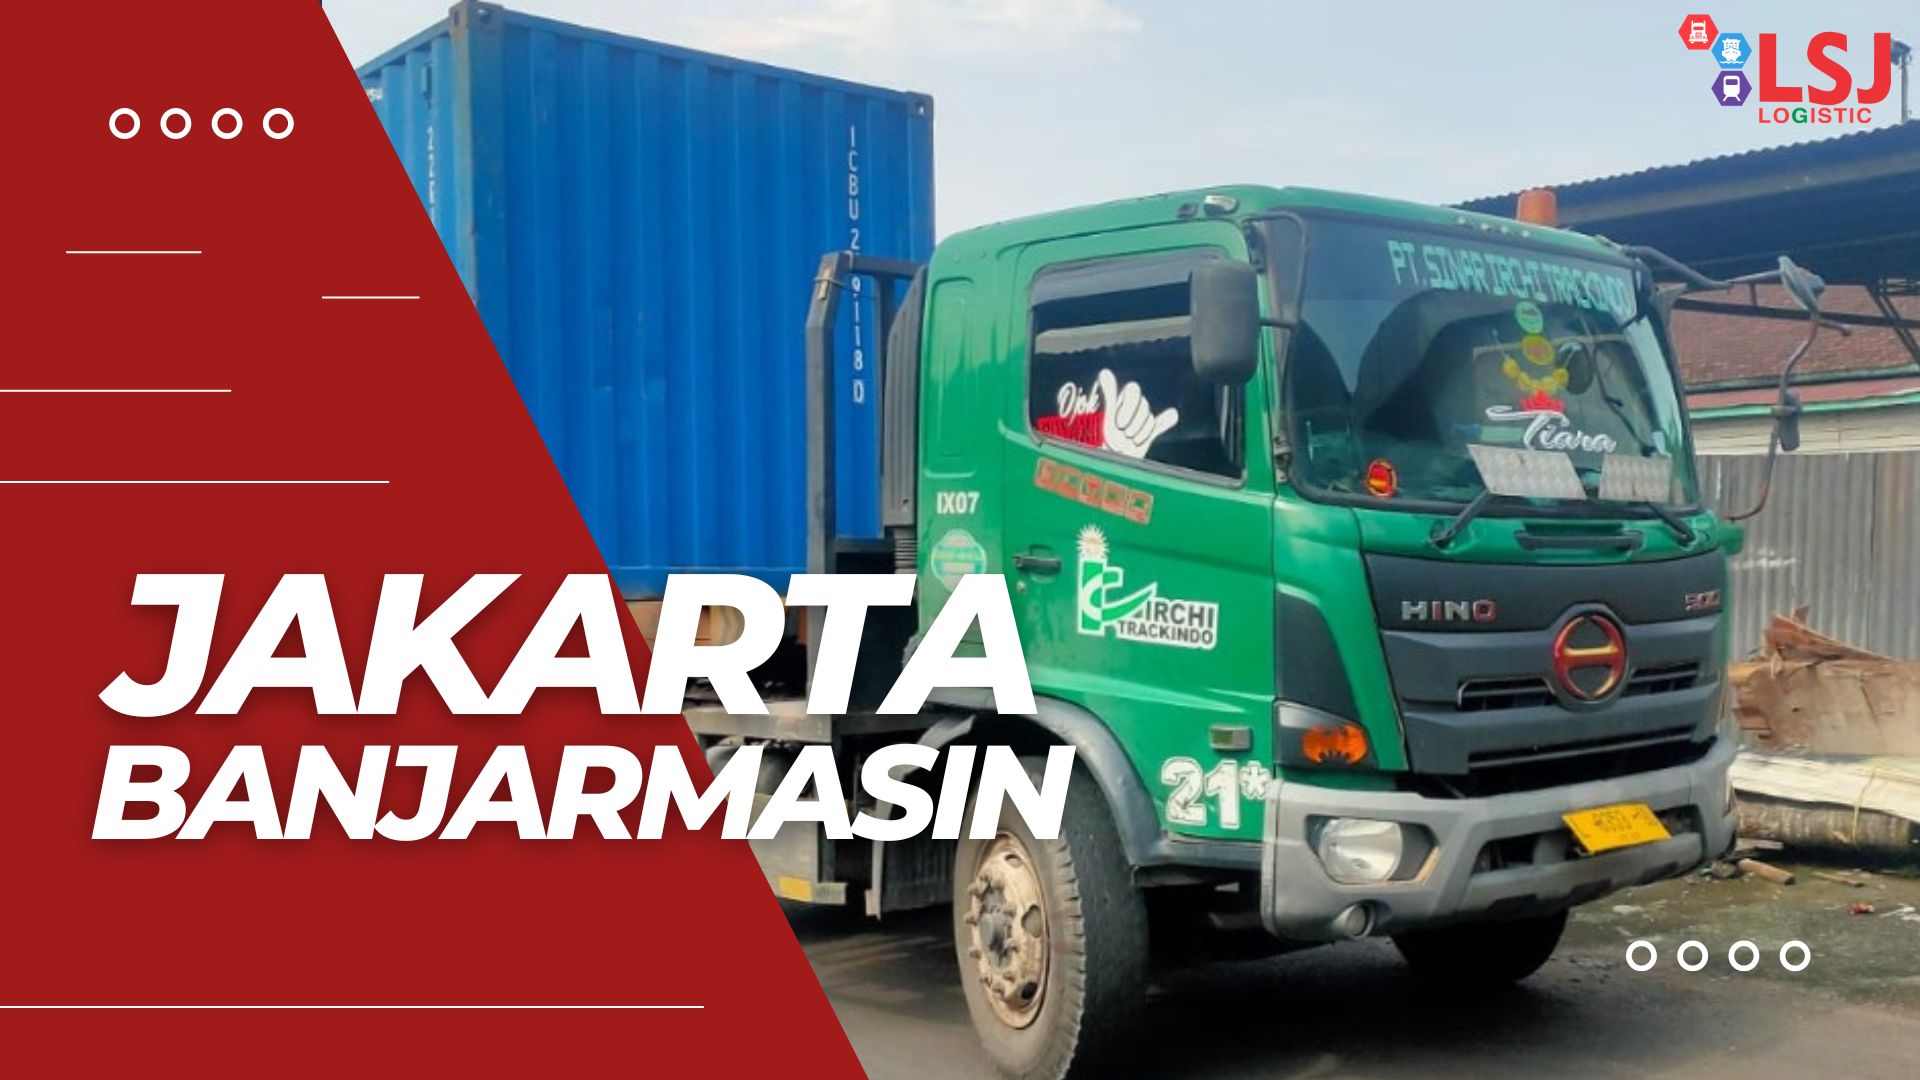 Cargo Container Jakarta Banjarmasin